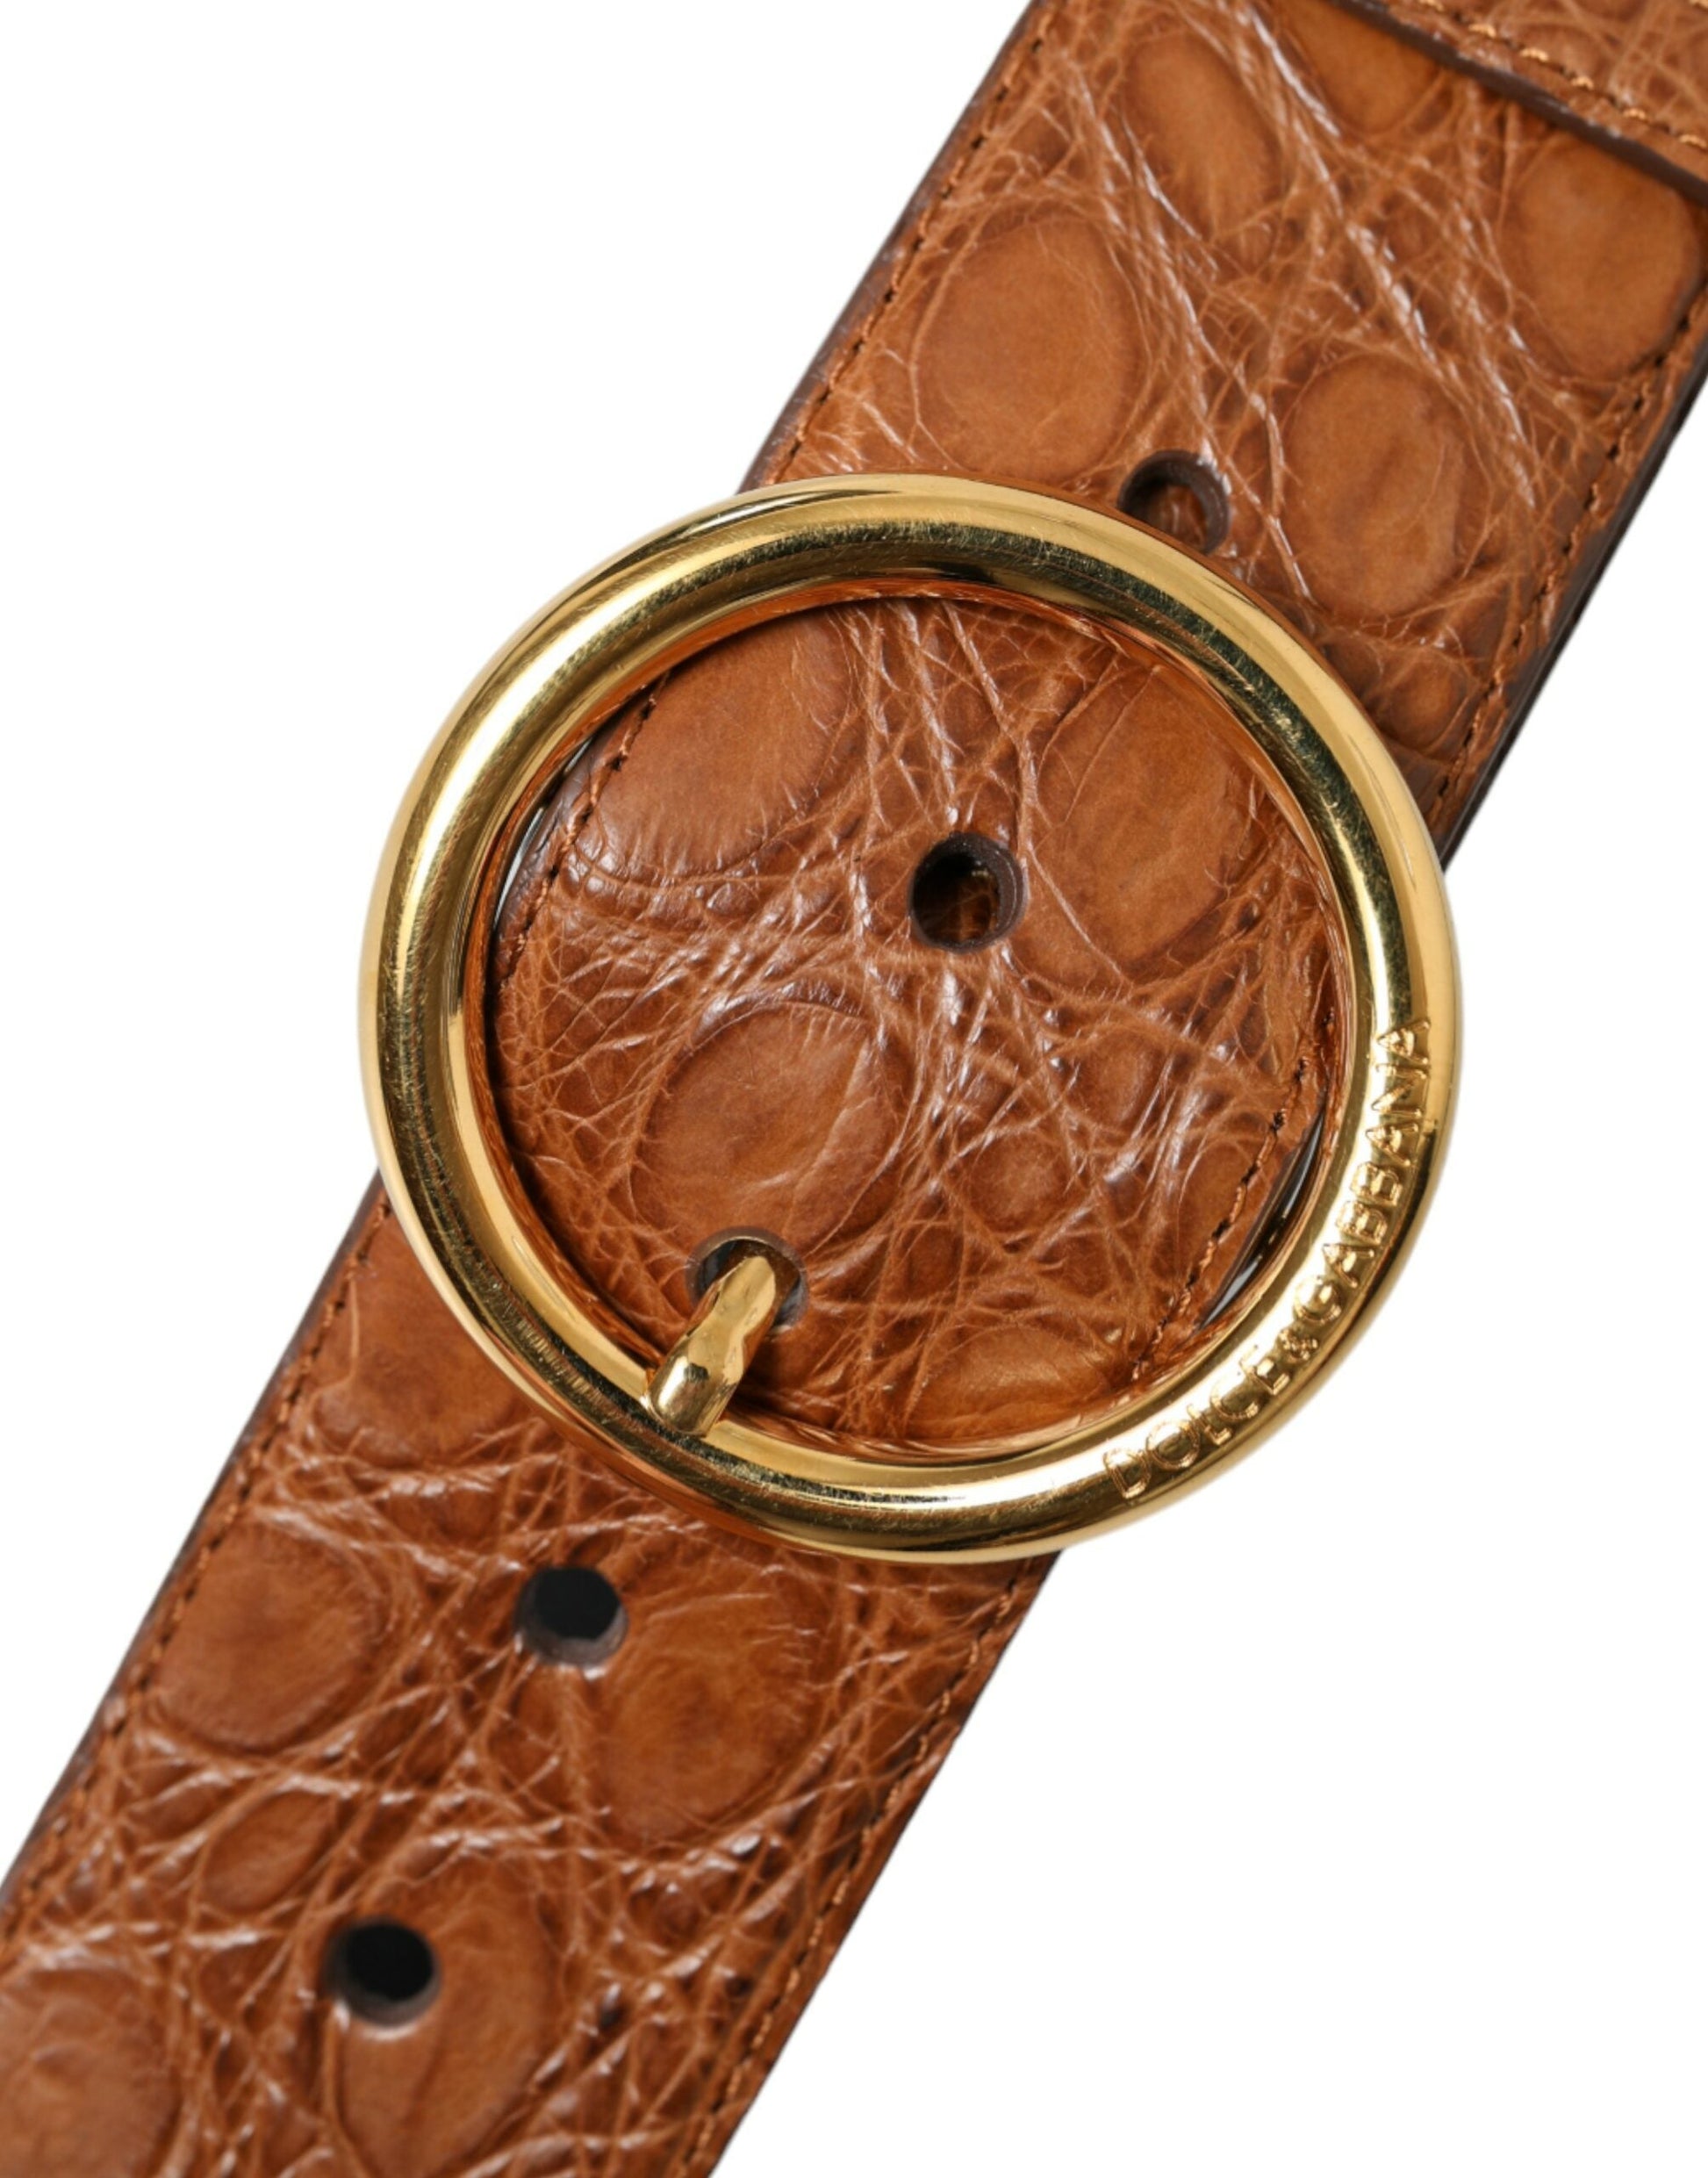 Dolce & Gabbana Elegant Exotic Leather Belt - Rich Brown | Fashionsarah.com